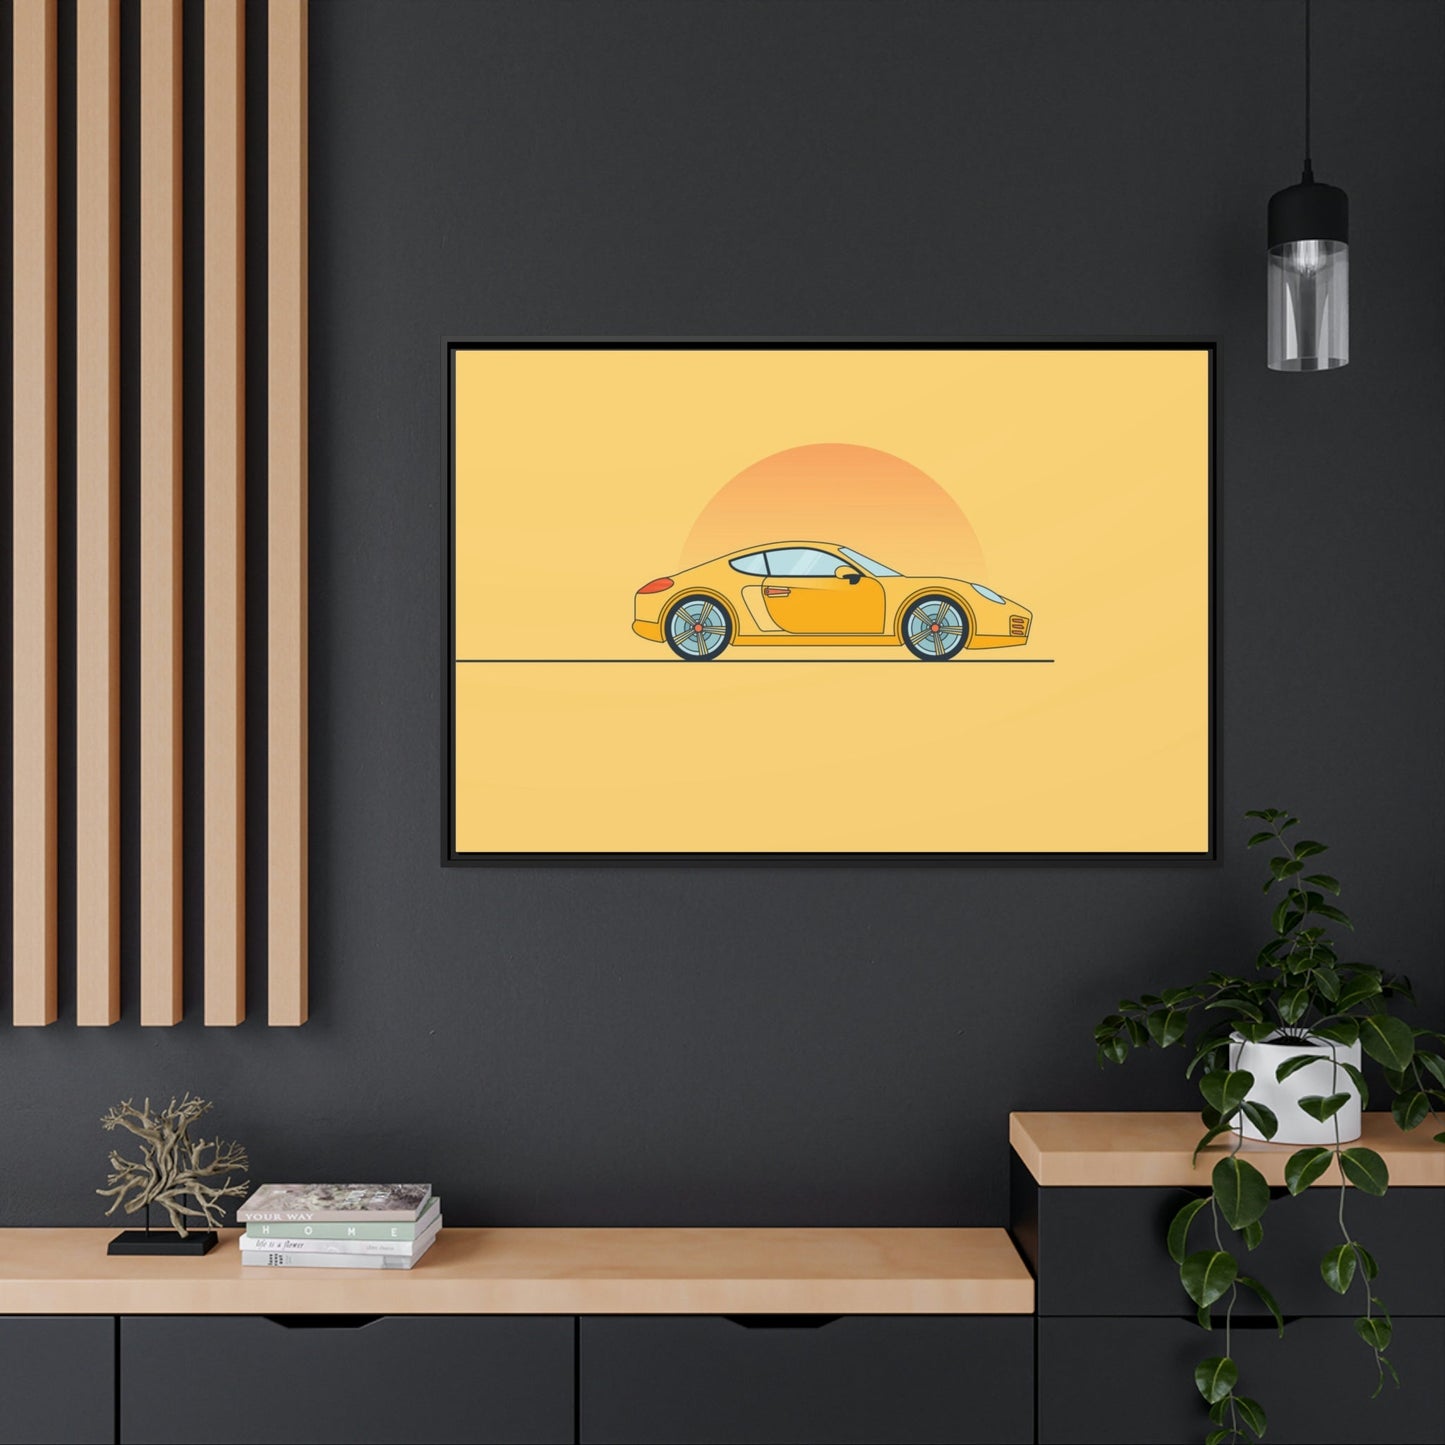 Racing Heritage: Framed Canvas & Poster Art Featuring Porsche Legends